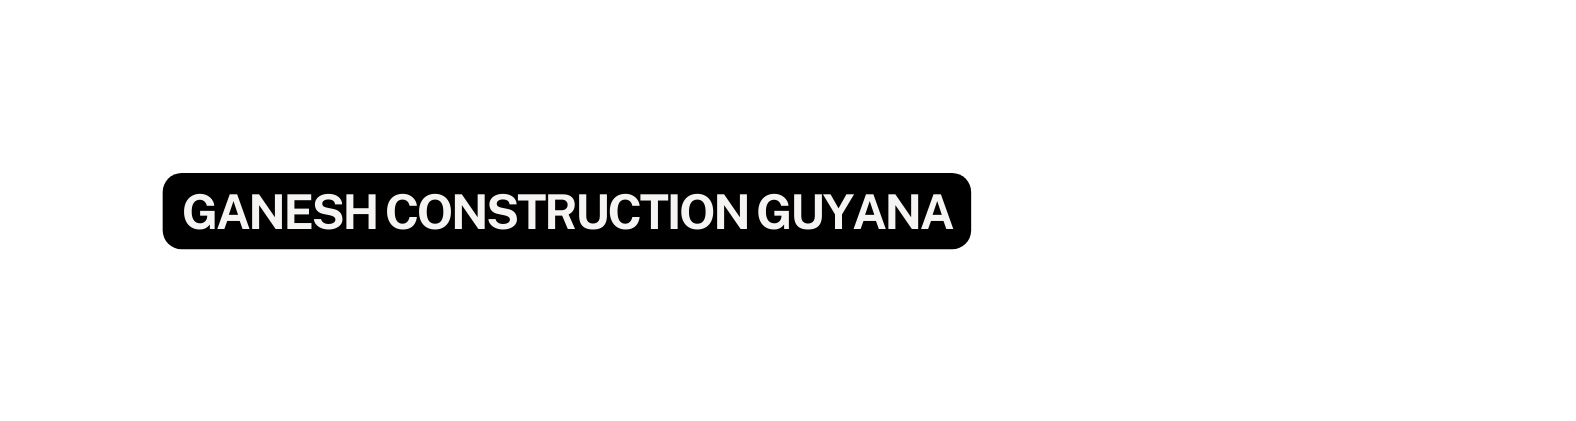 GANESH CONSTRUCTION GUYANA